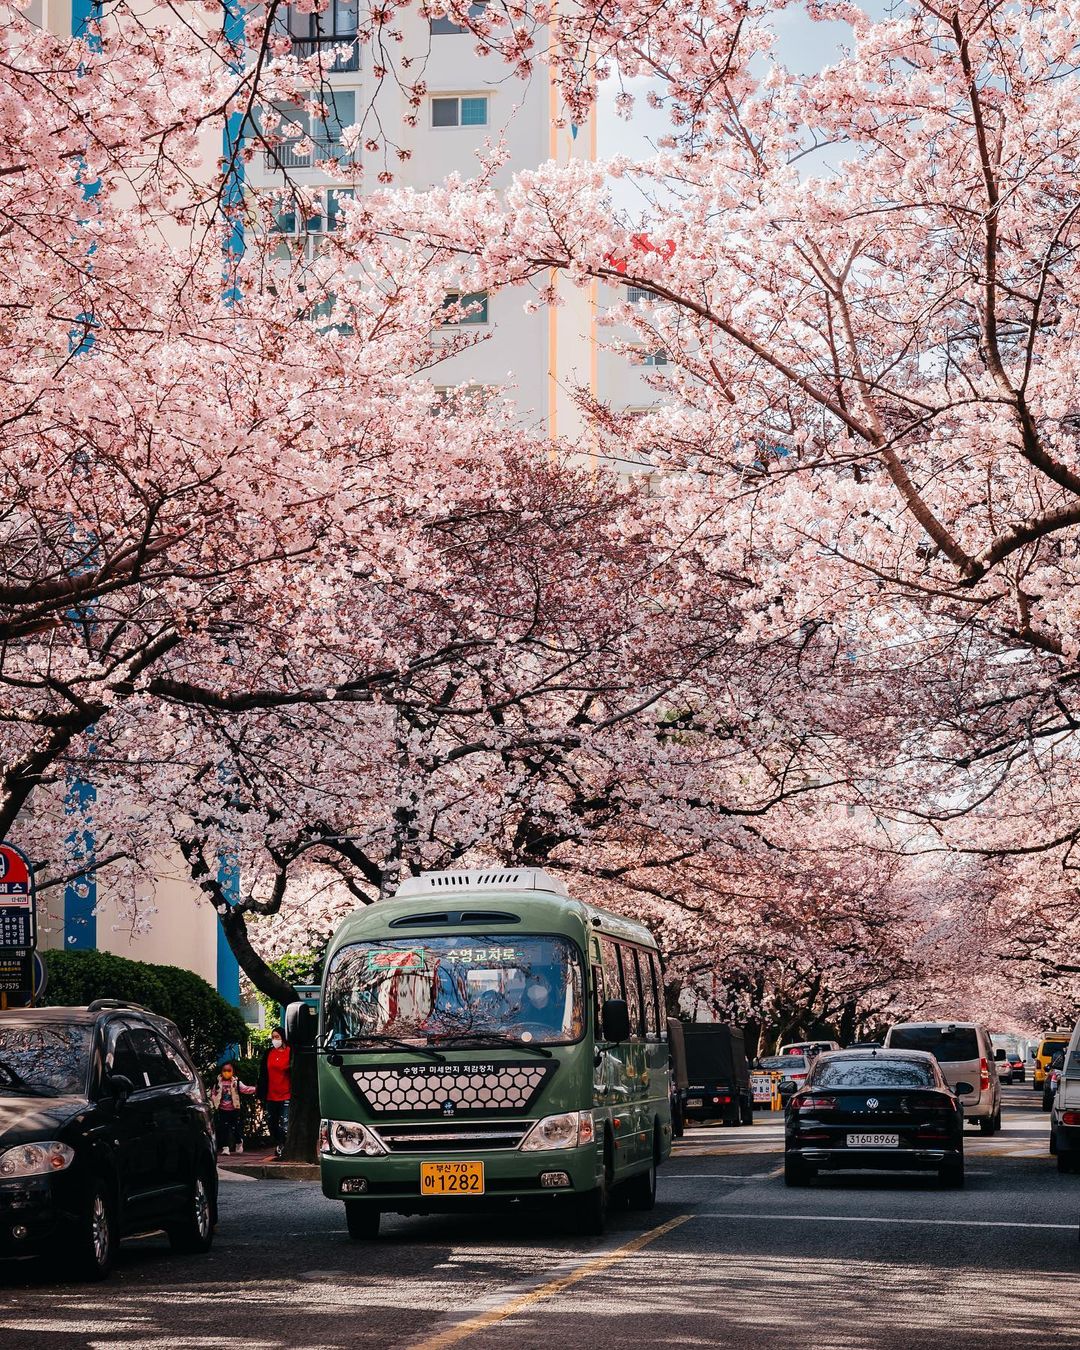 south korea cherry blossoms - namcheon-dong cherry blossom street